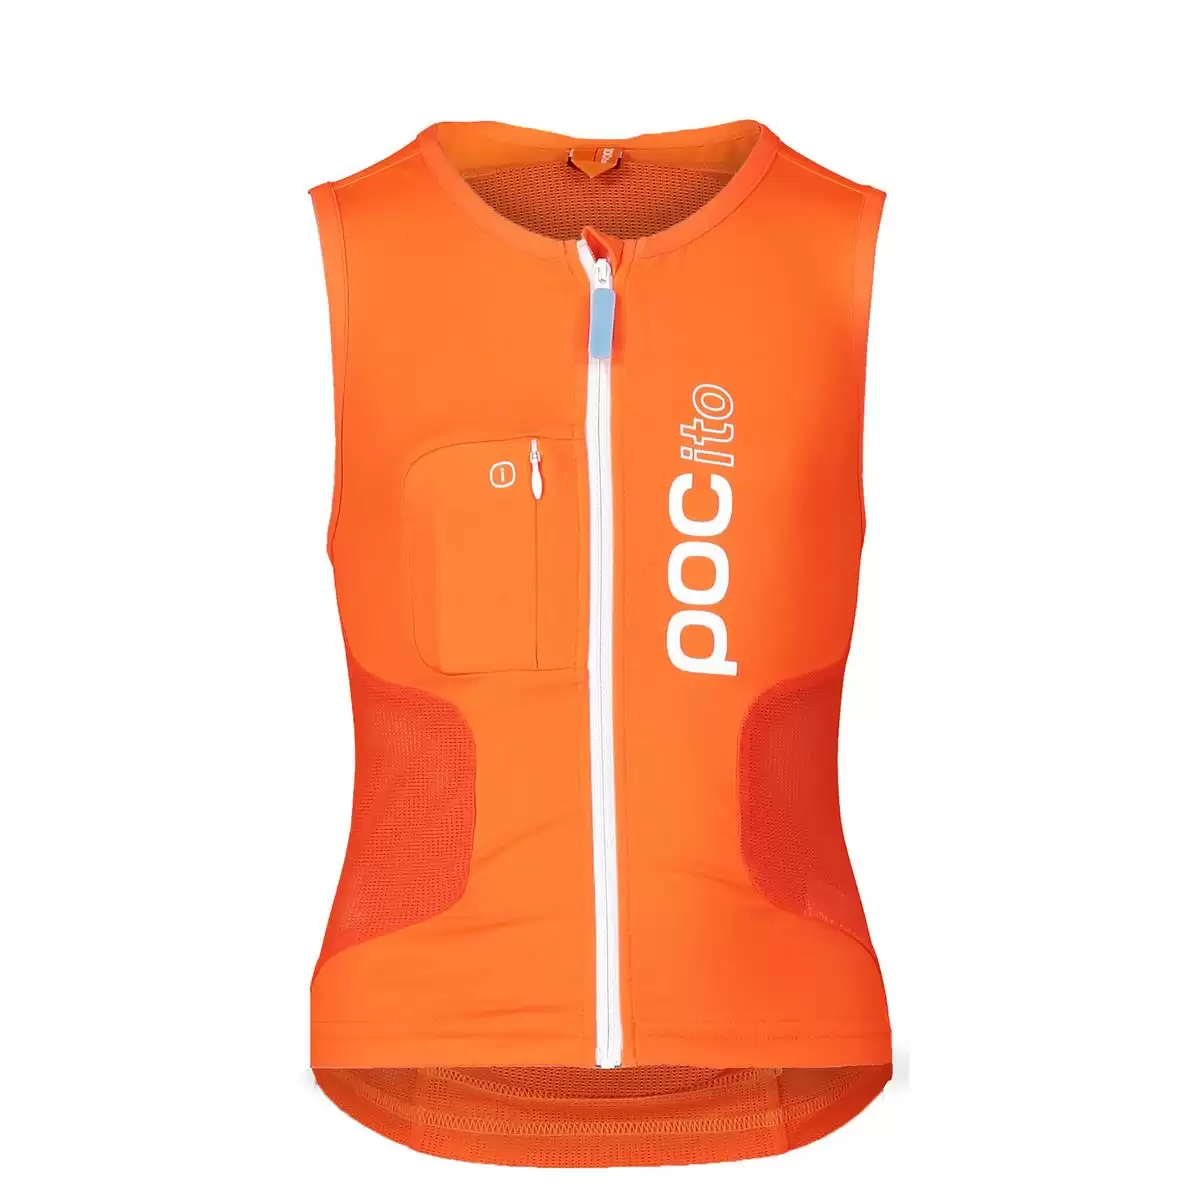 Kid POCito VPD Air Vest protective gilet Orange Size M - image